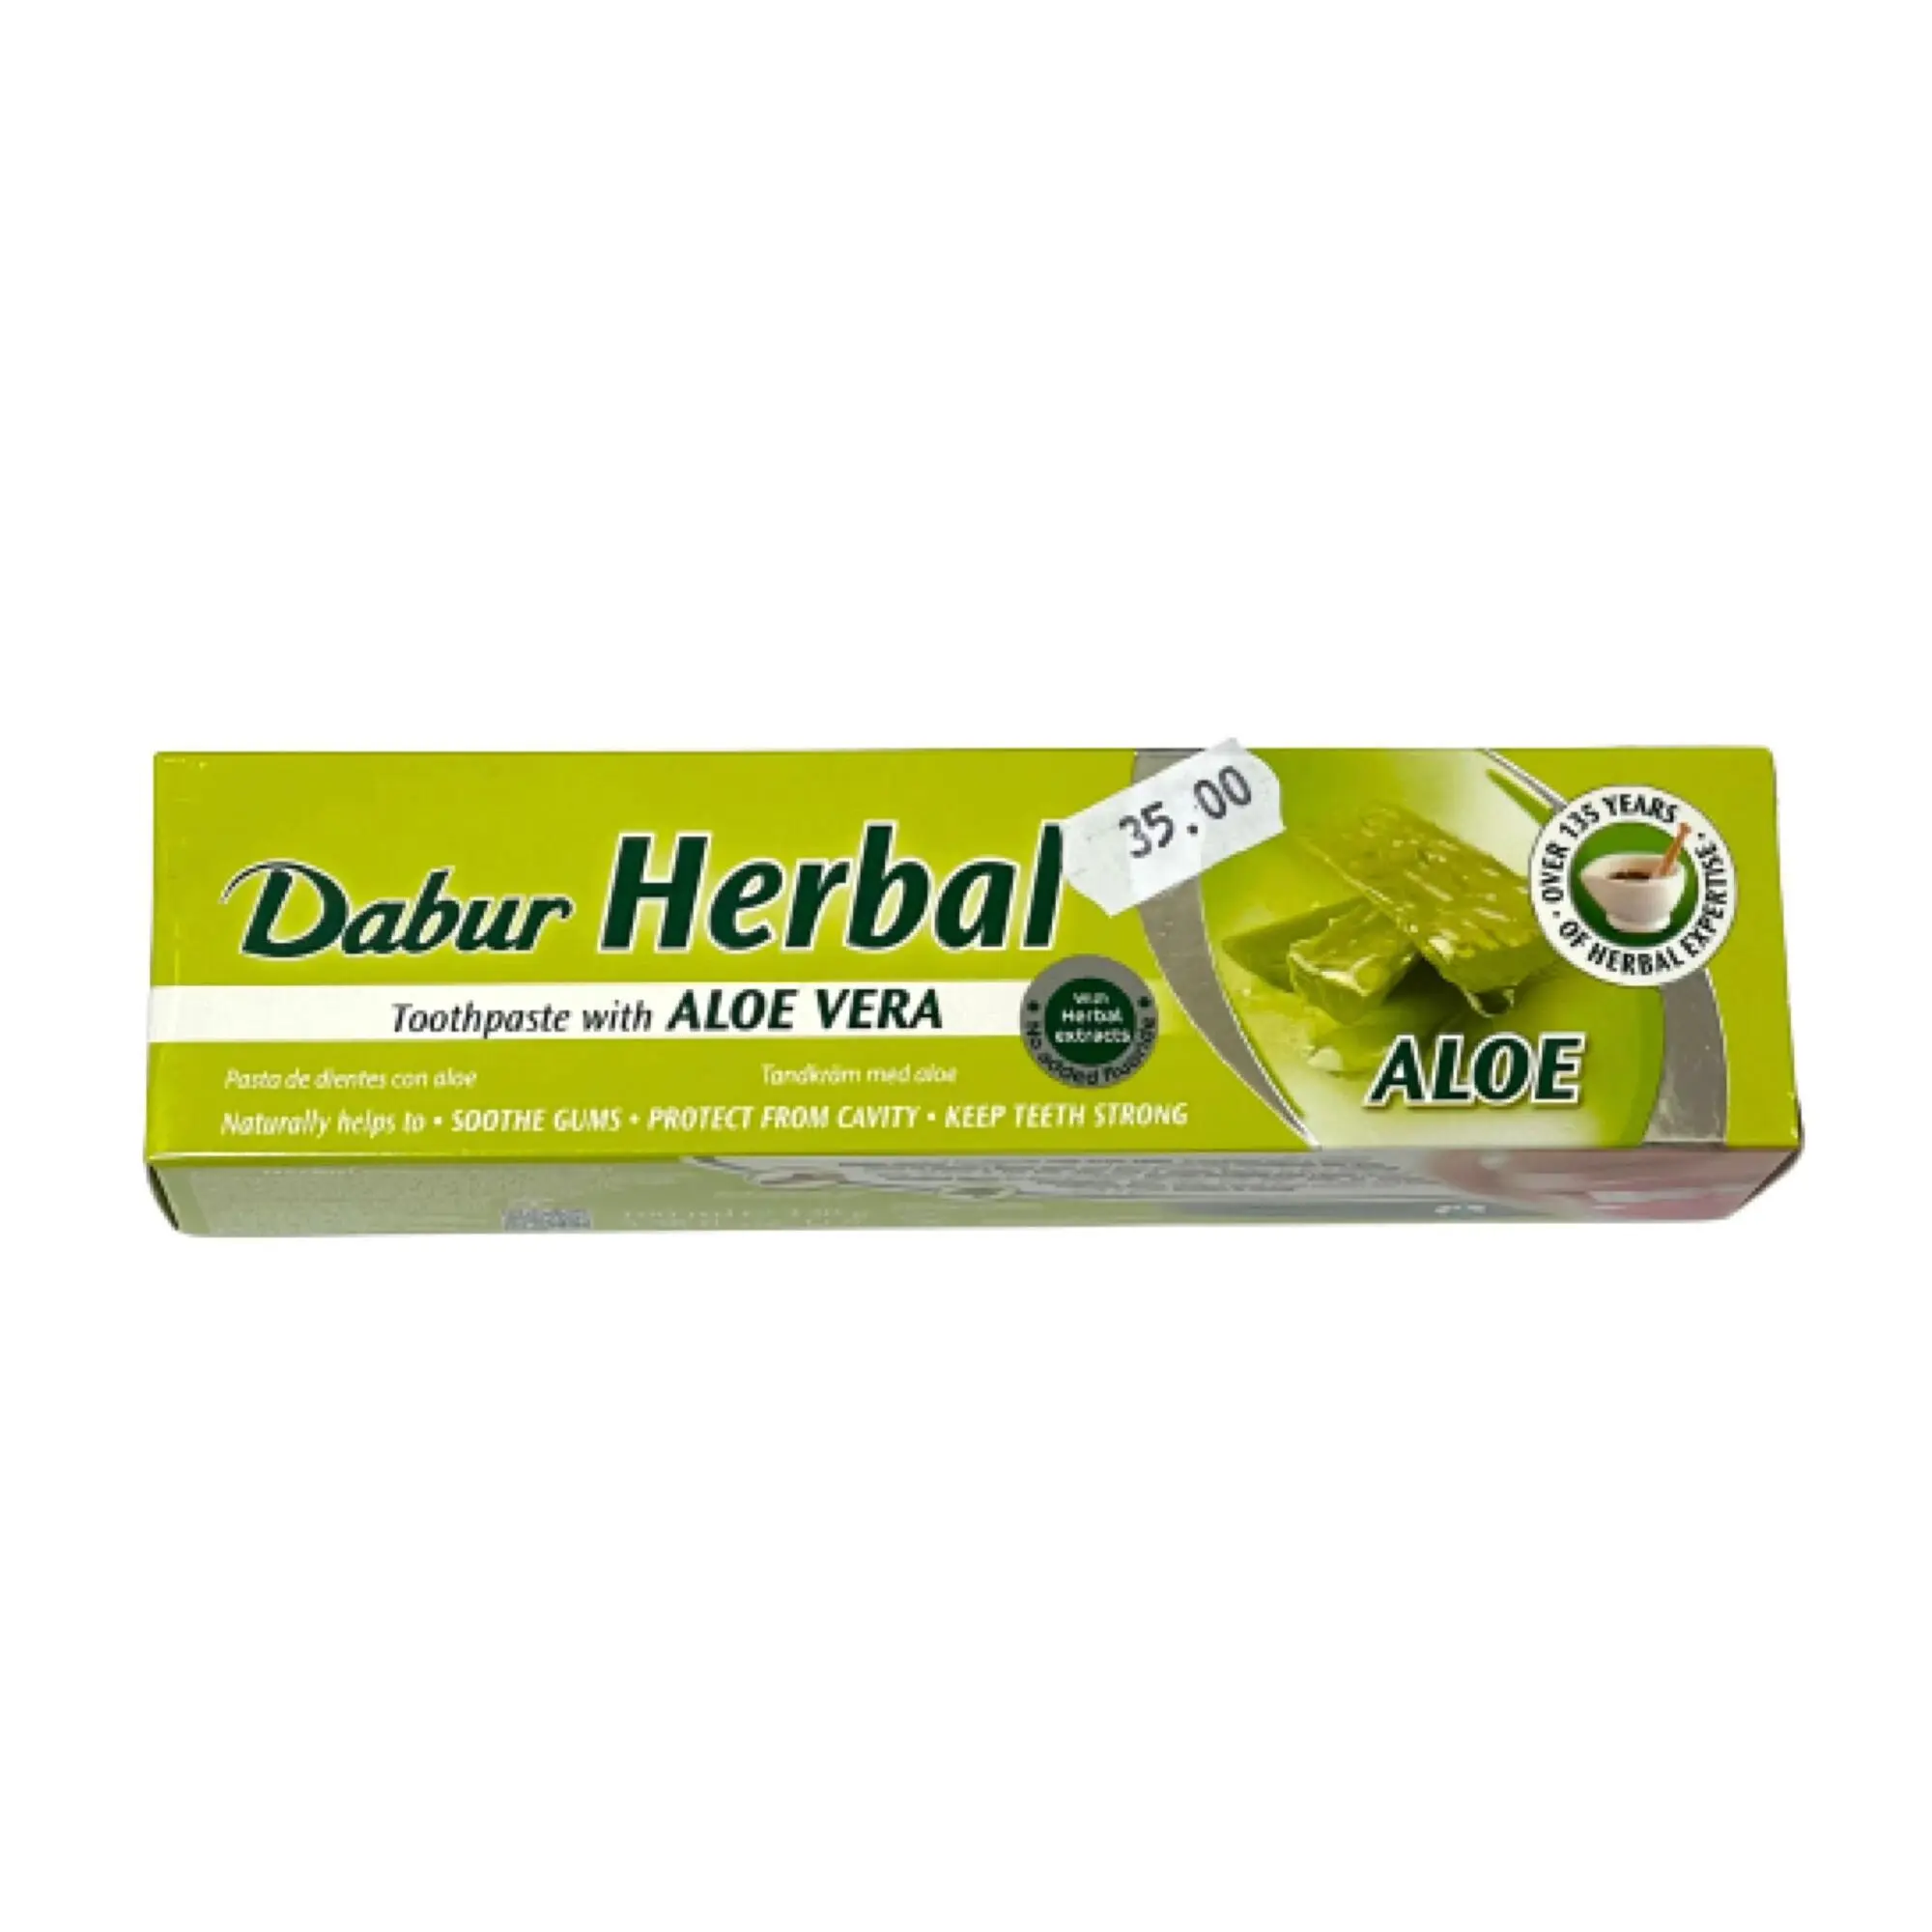 midt i intetsteds mod gentage Køb Dabur Herbal aloe vera tandpasta, 100ml - 35,00 DKK,-